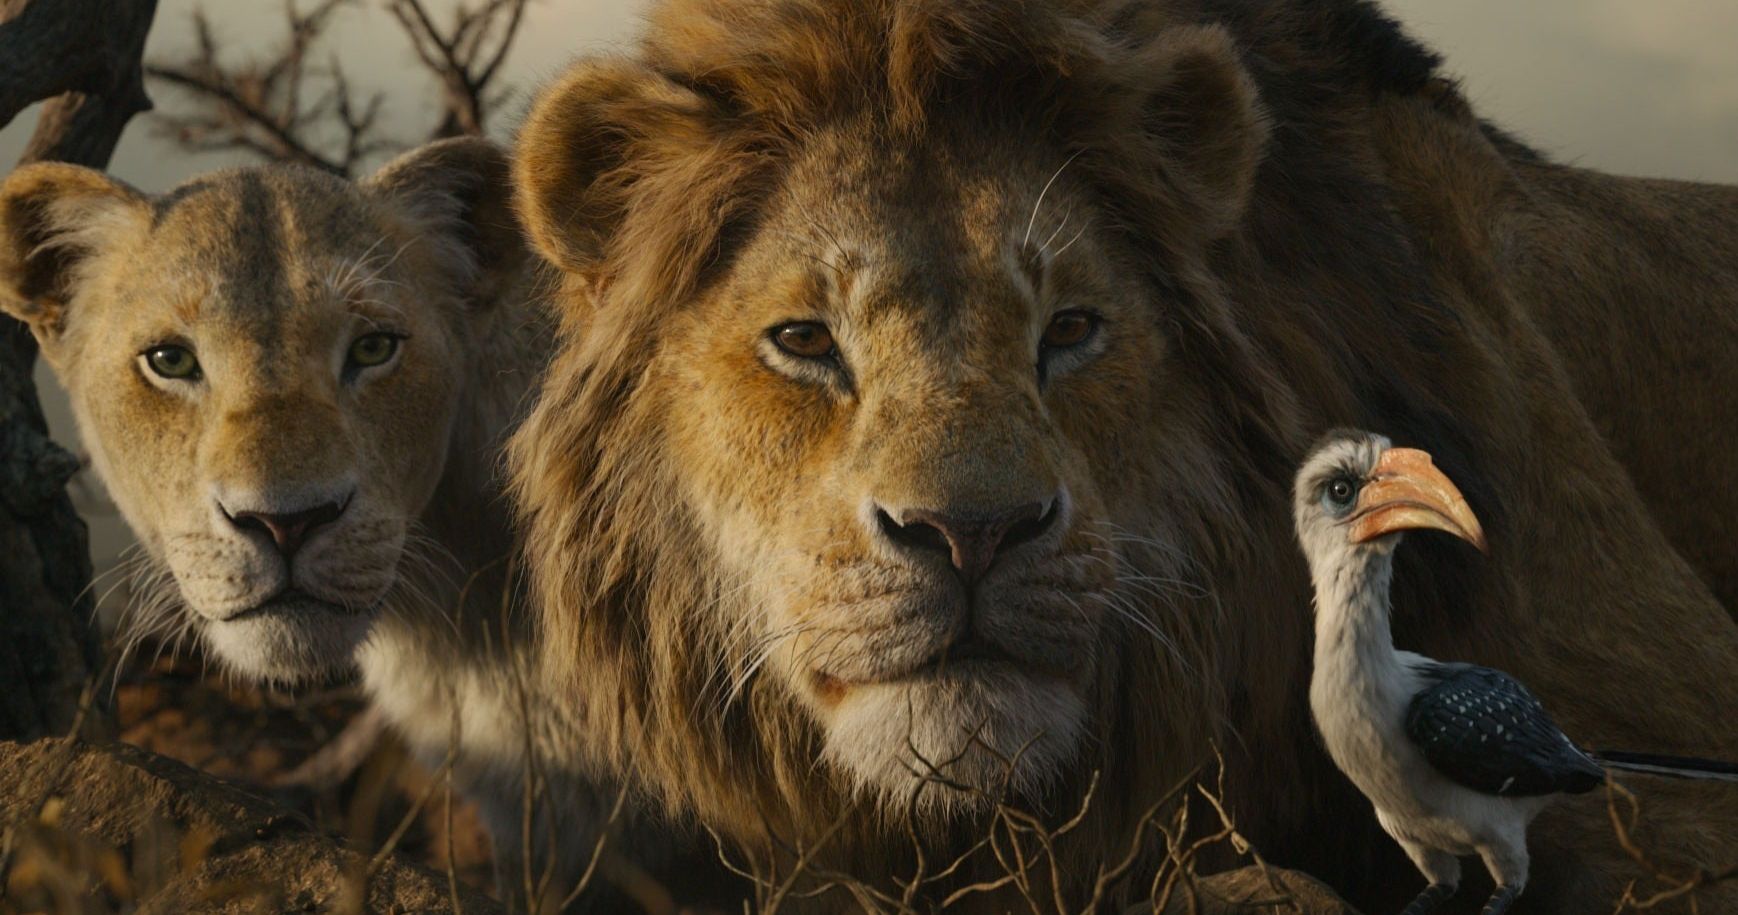 Lion King Remake Is Disney's Biggest Hit That Isn't Marvel or Star Wars